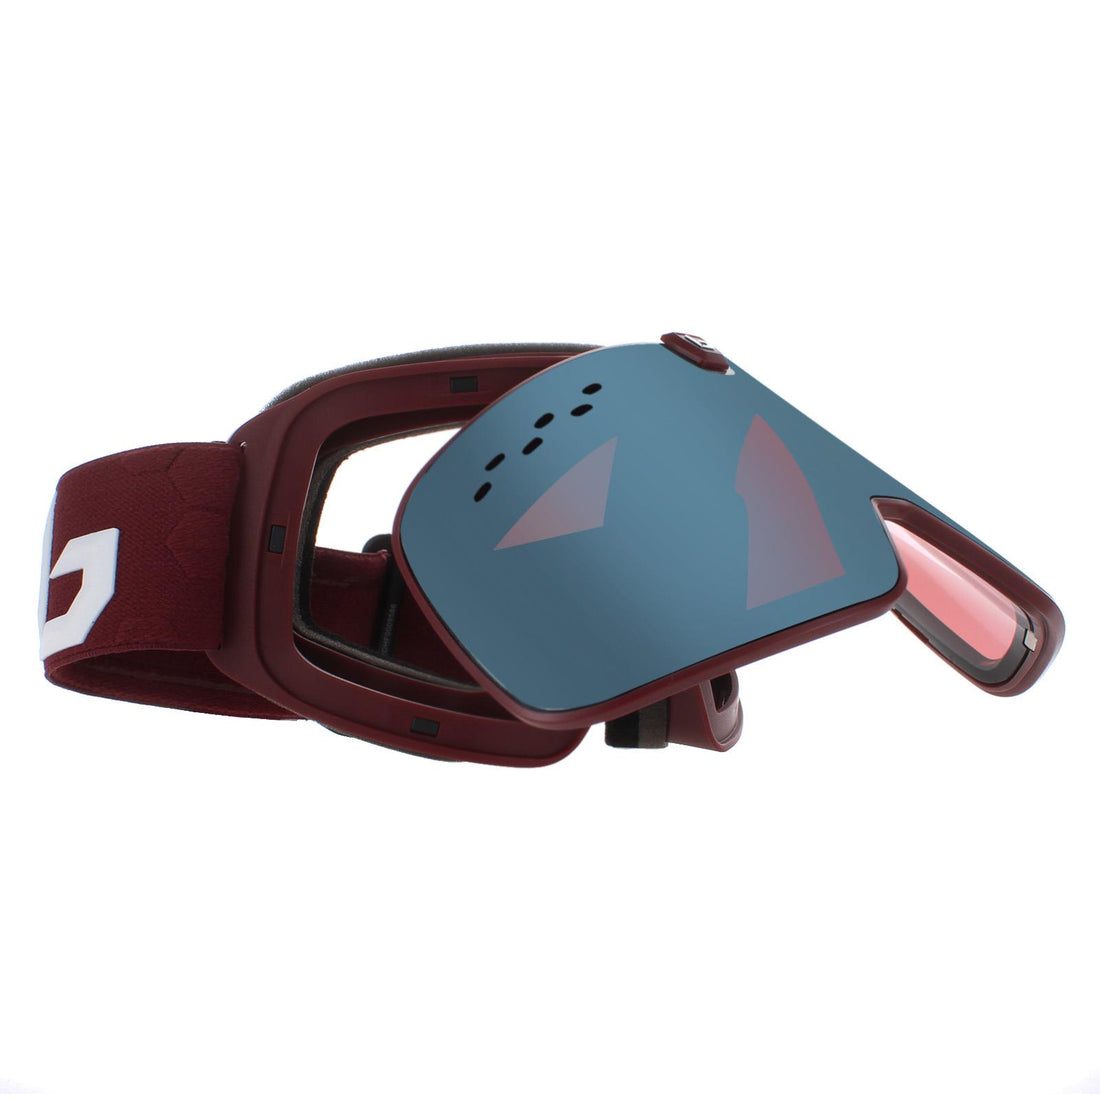 Bolle Ski Goggles Nevada BG394003 Matte Garnet Volt Ice Blue & Vermillon Blue